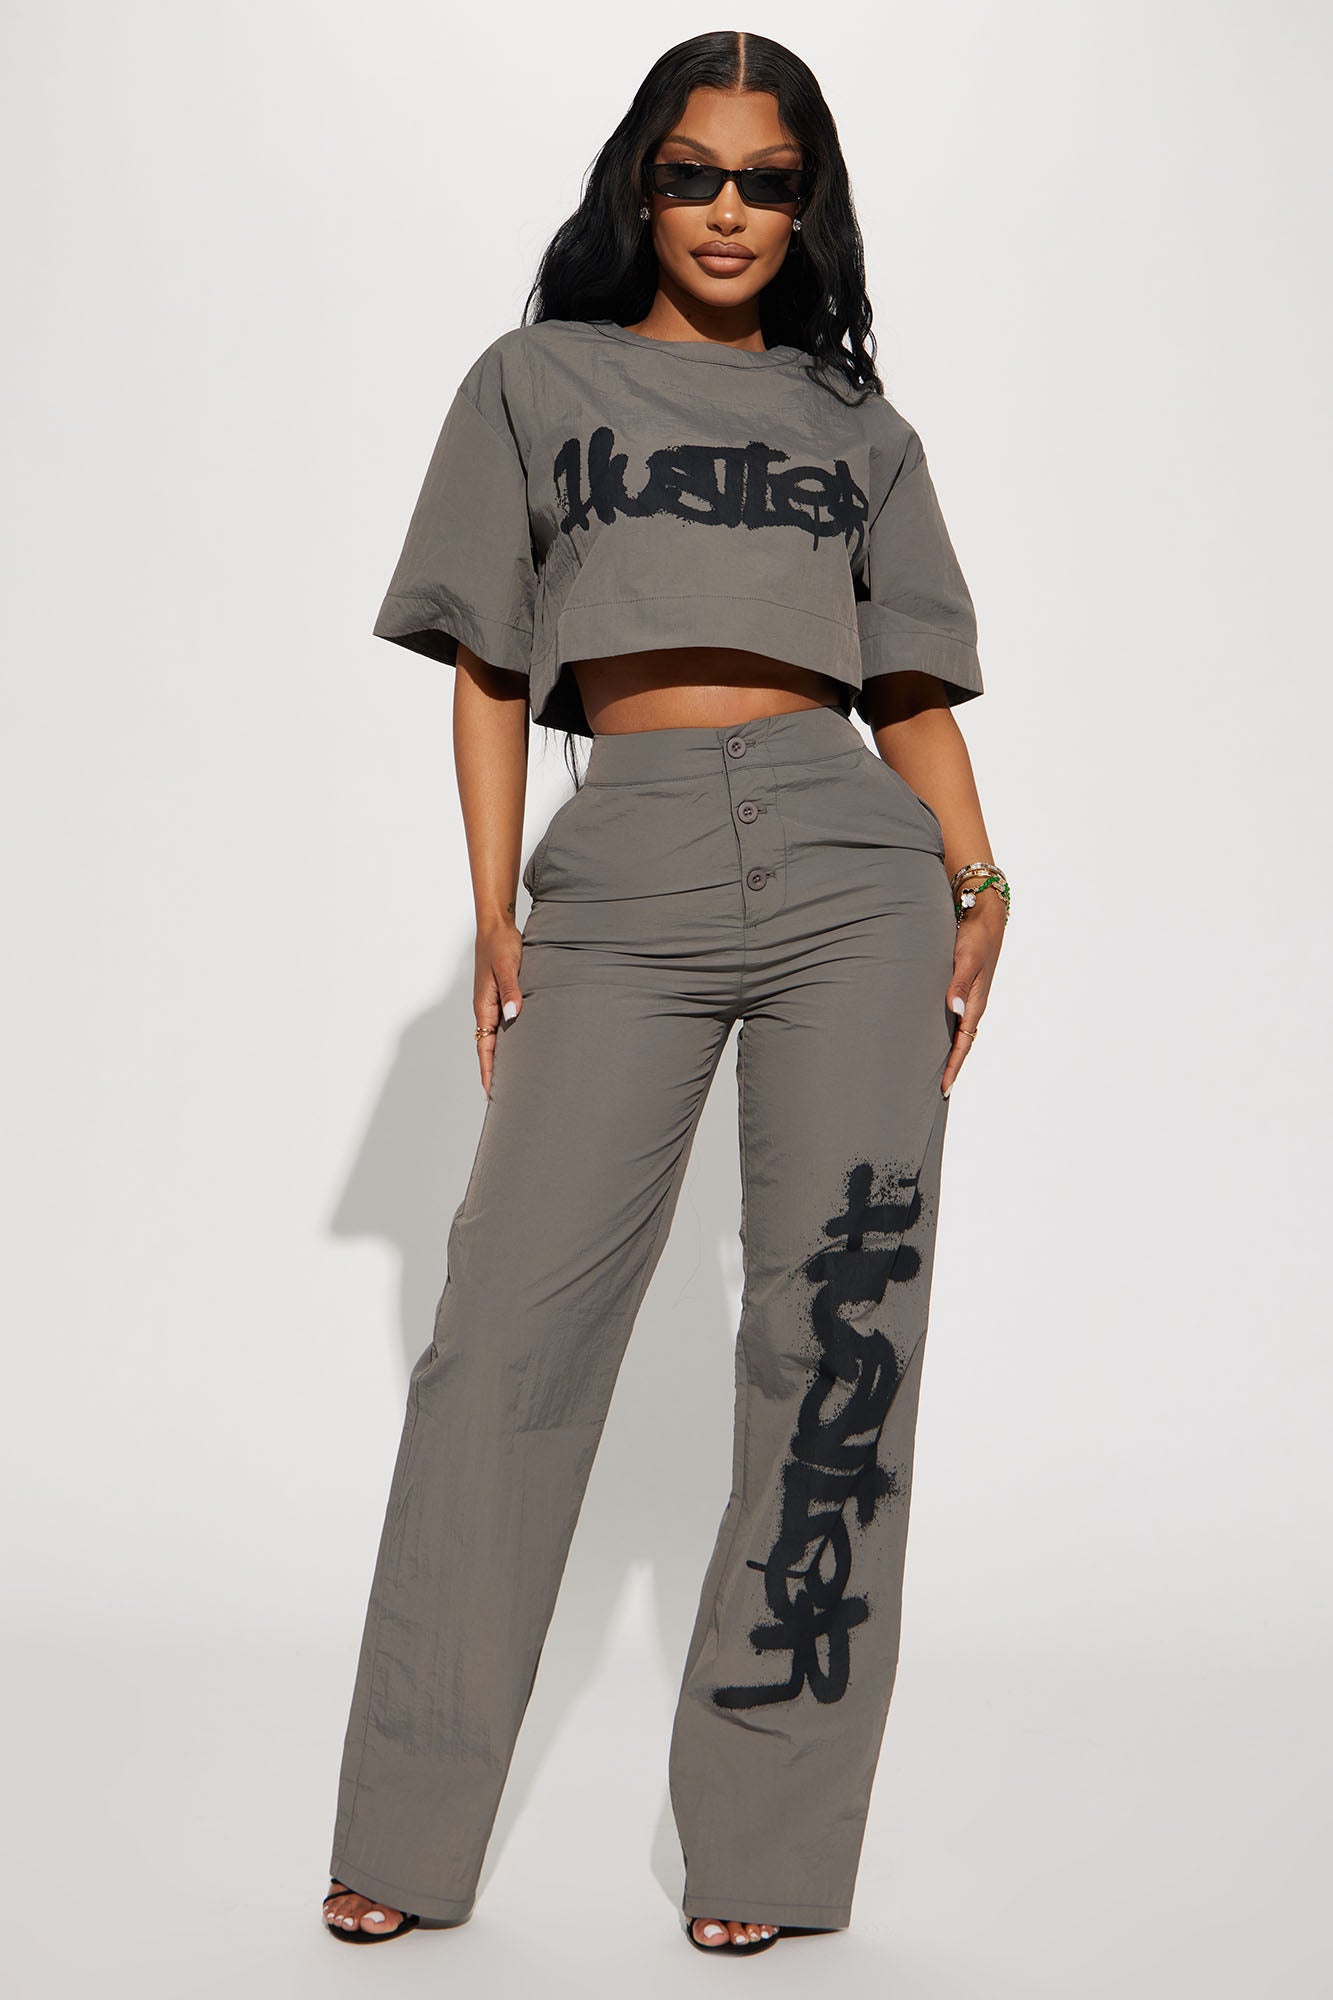 Time To Hustle Windbreaker Pant Set - Grey, Fashion Nova, Matching Sets